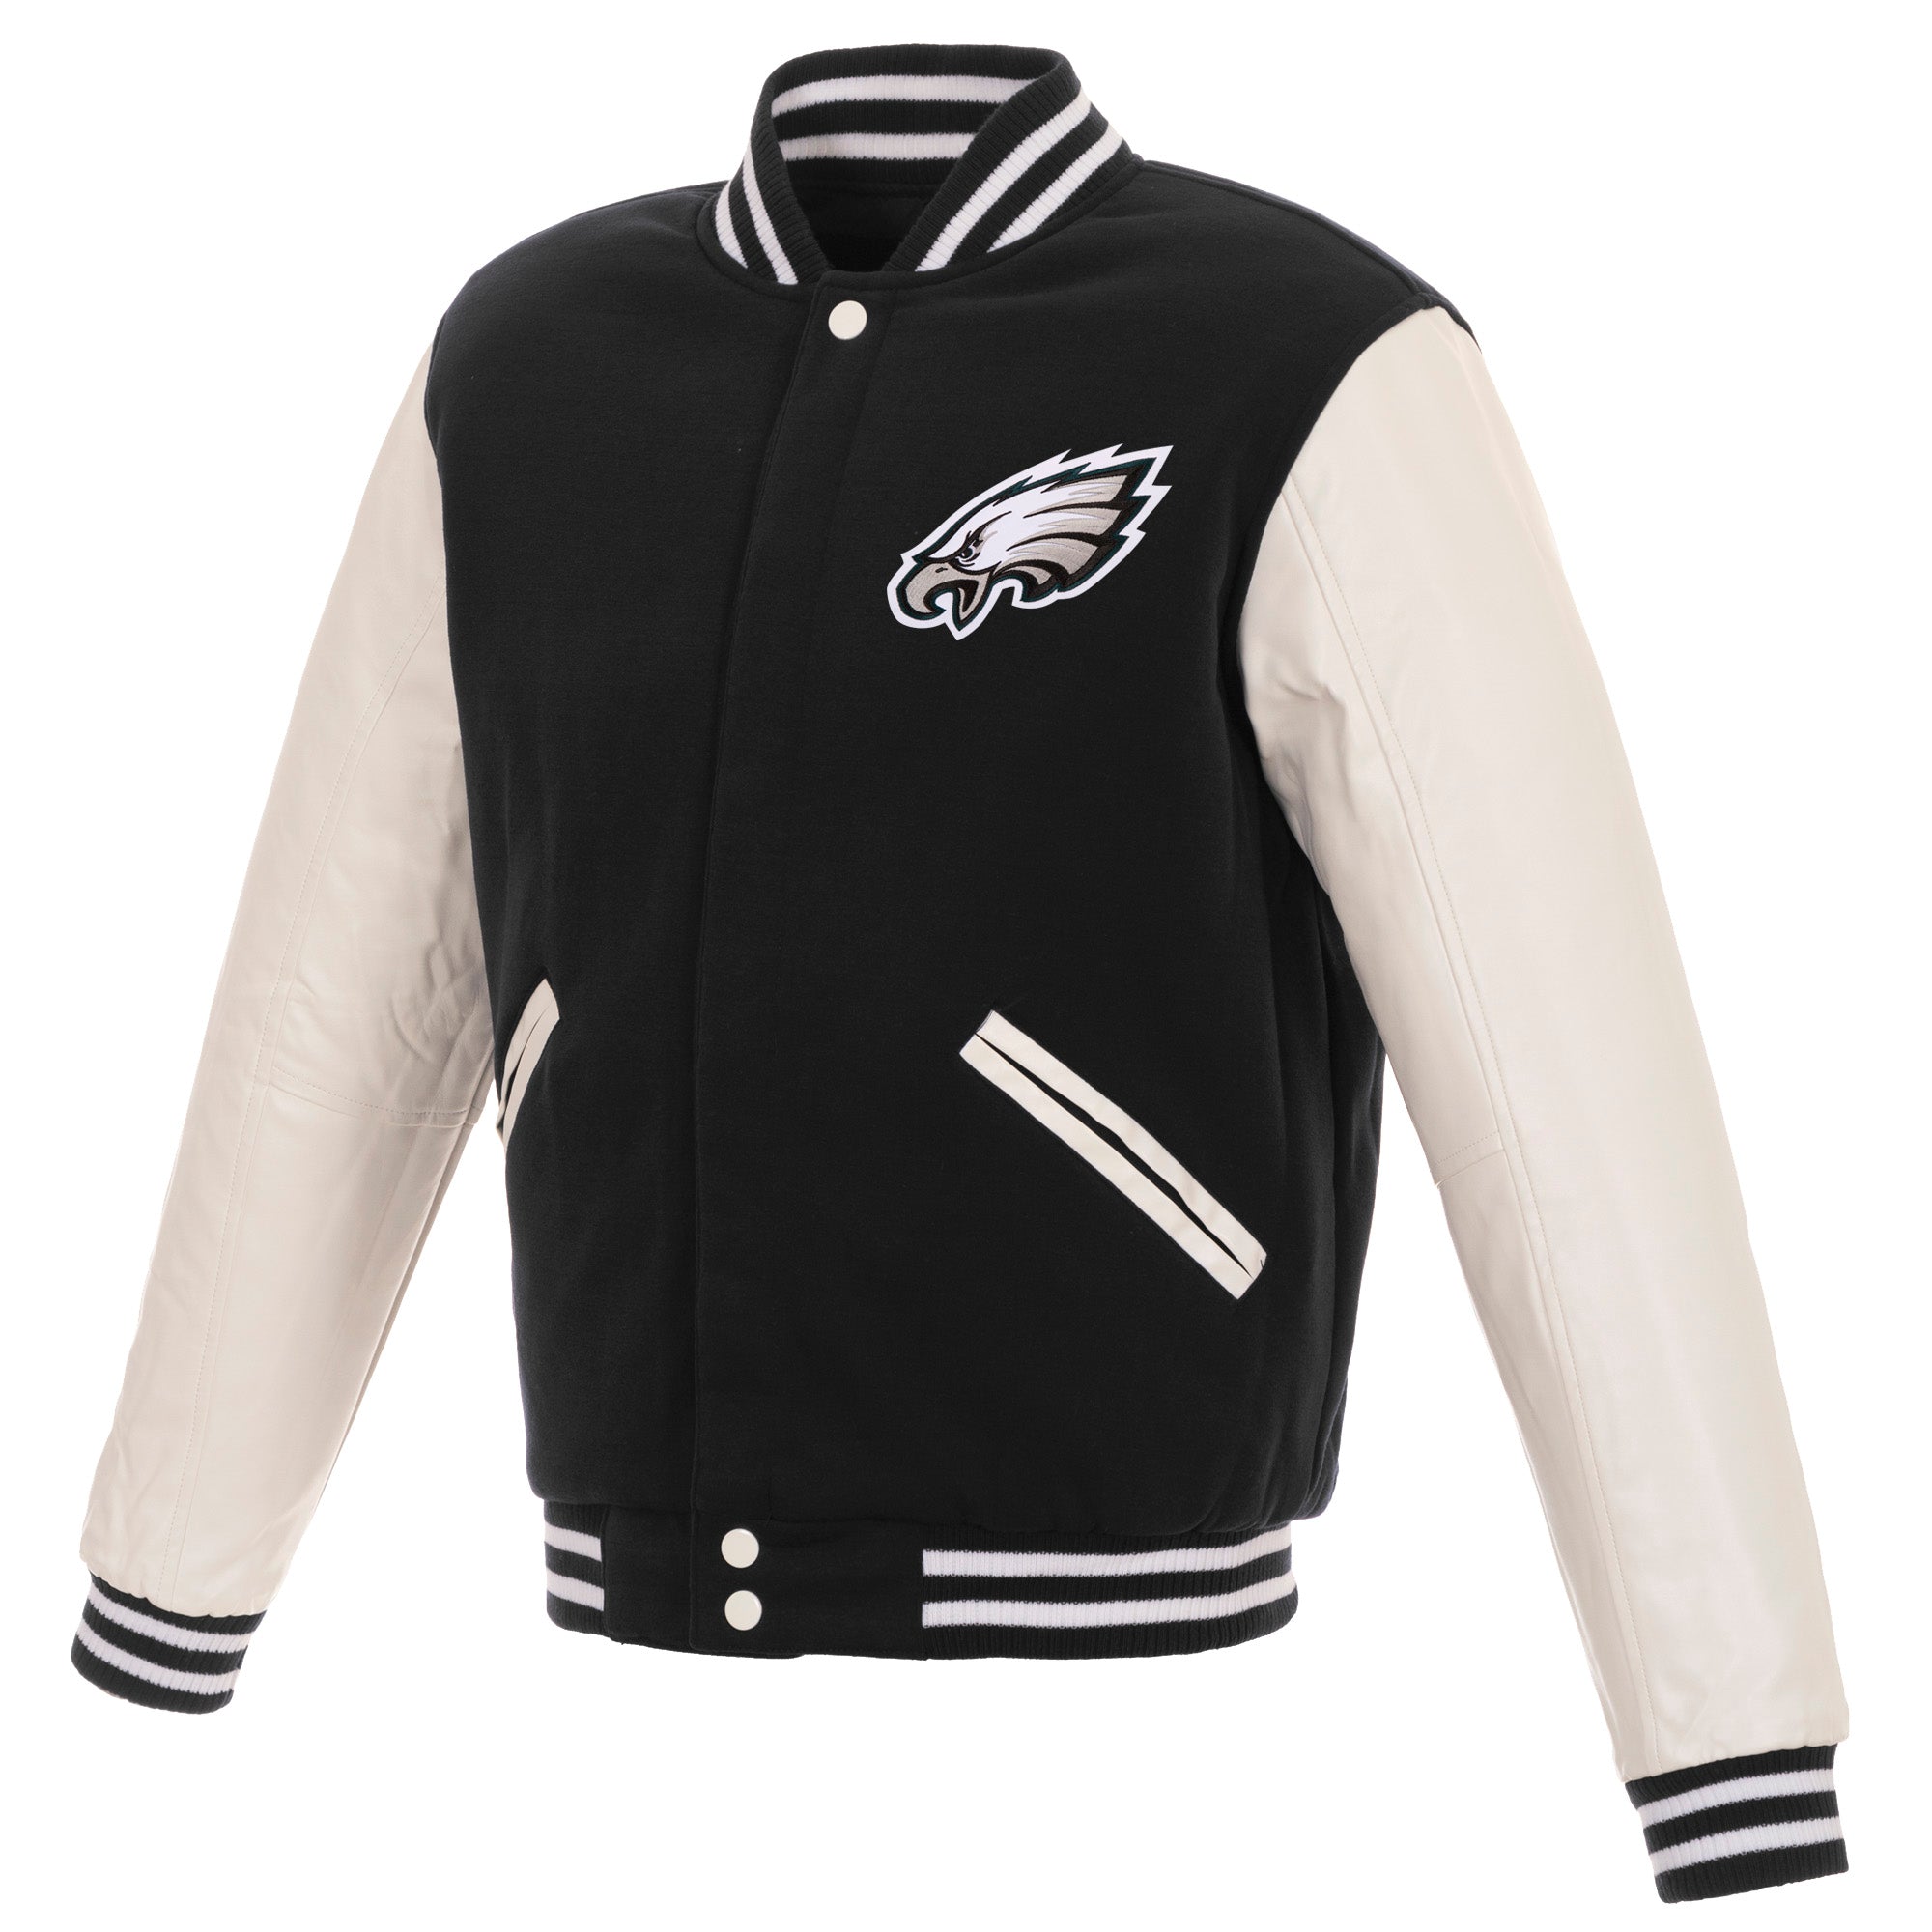 Philadelphia Eagles - JH Design Reversible Fleece Jacket with Faux Leather Sleeves - Black/White Medium